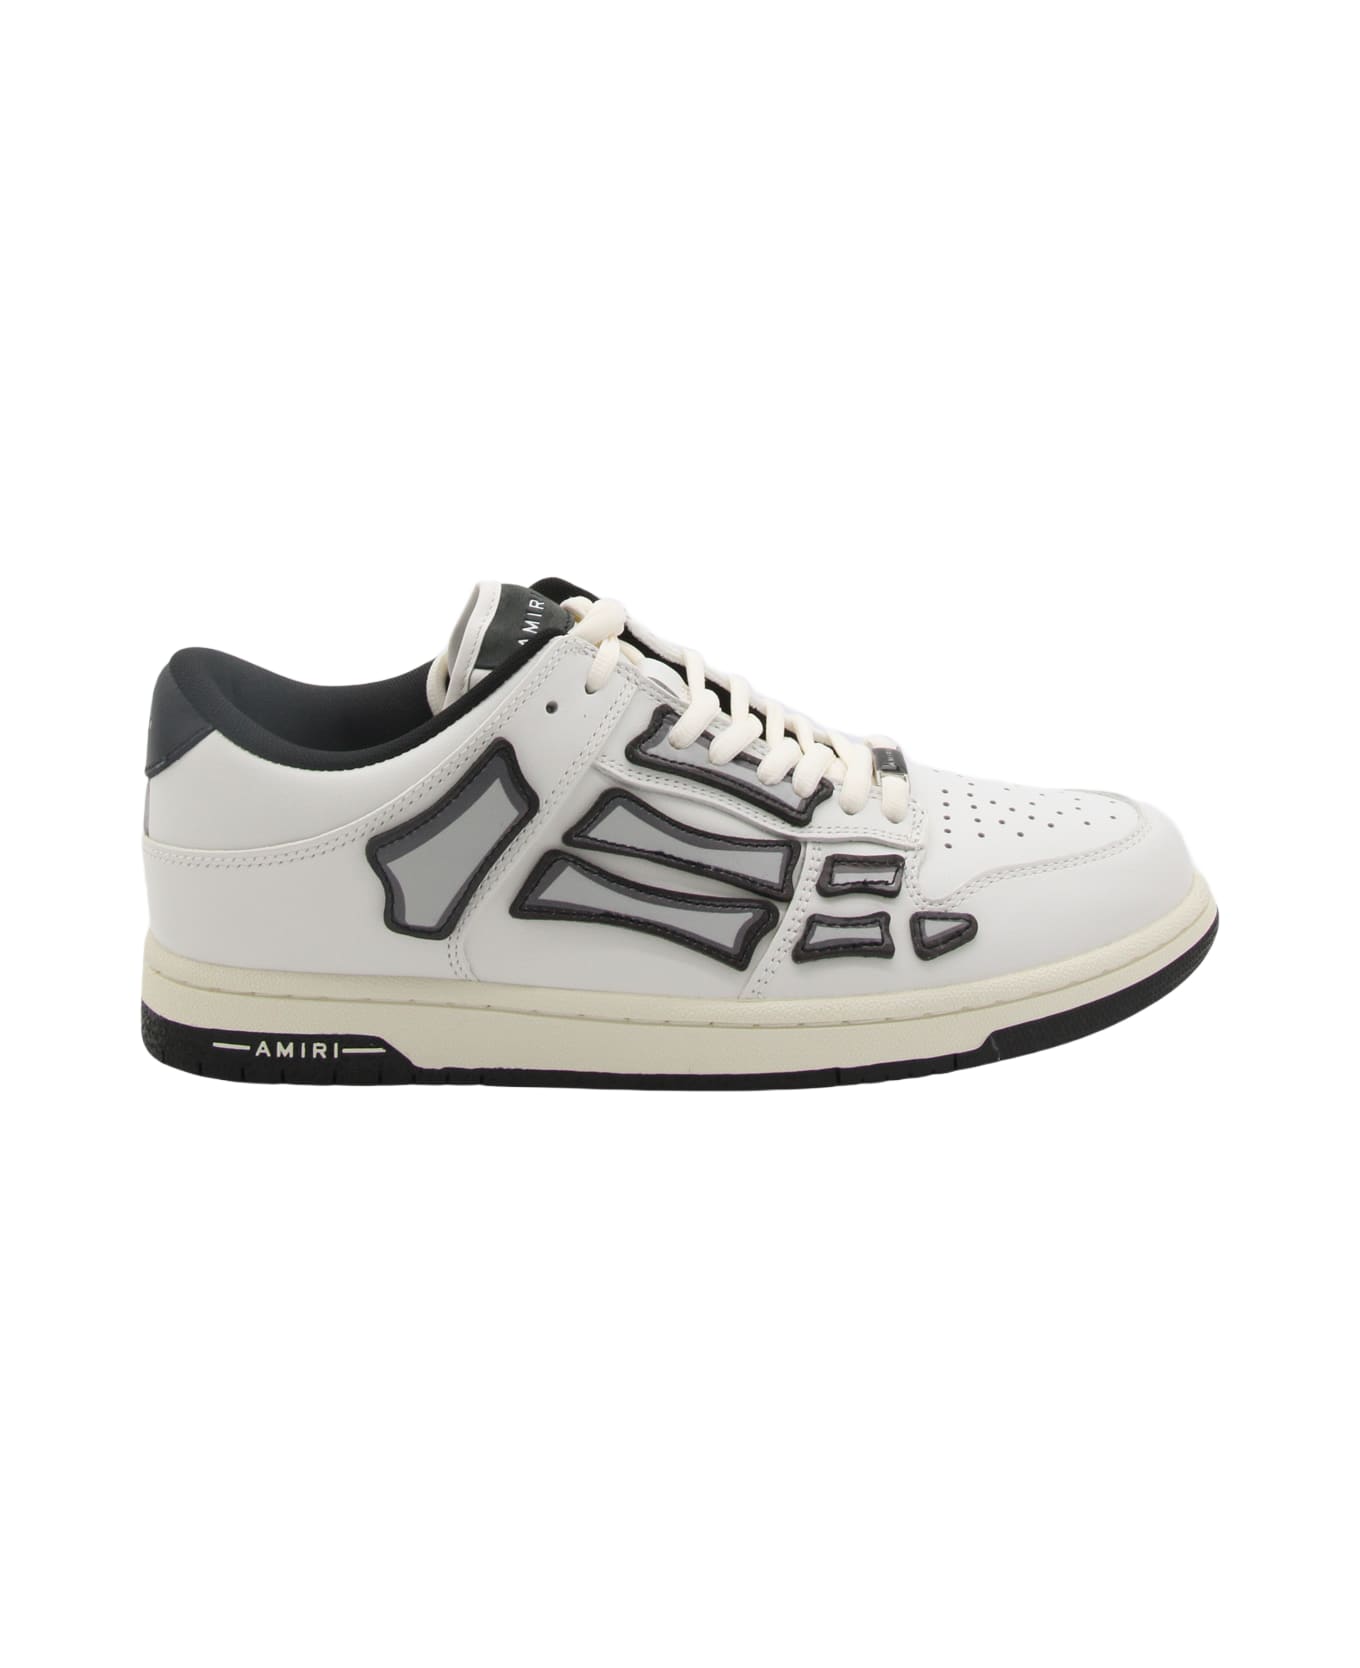 AMIRI White And Black Leather Skel Sneakers - White